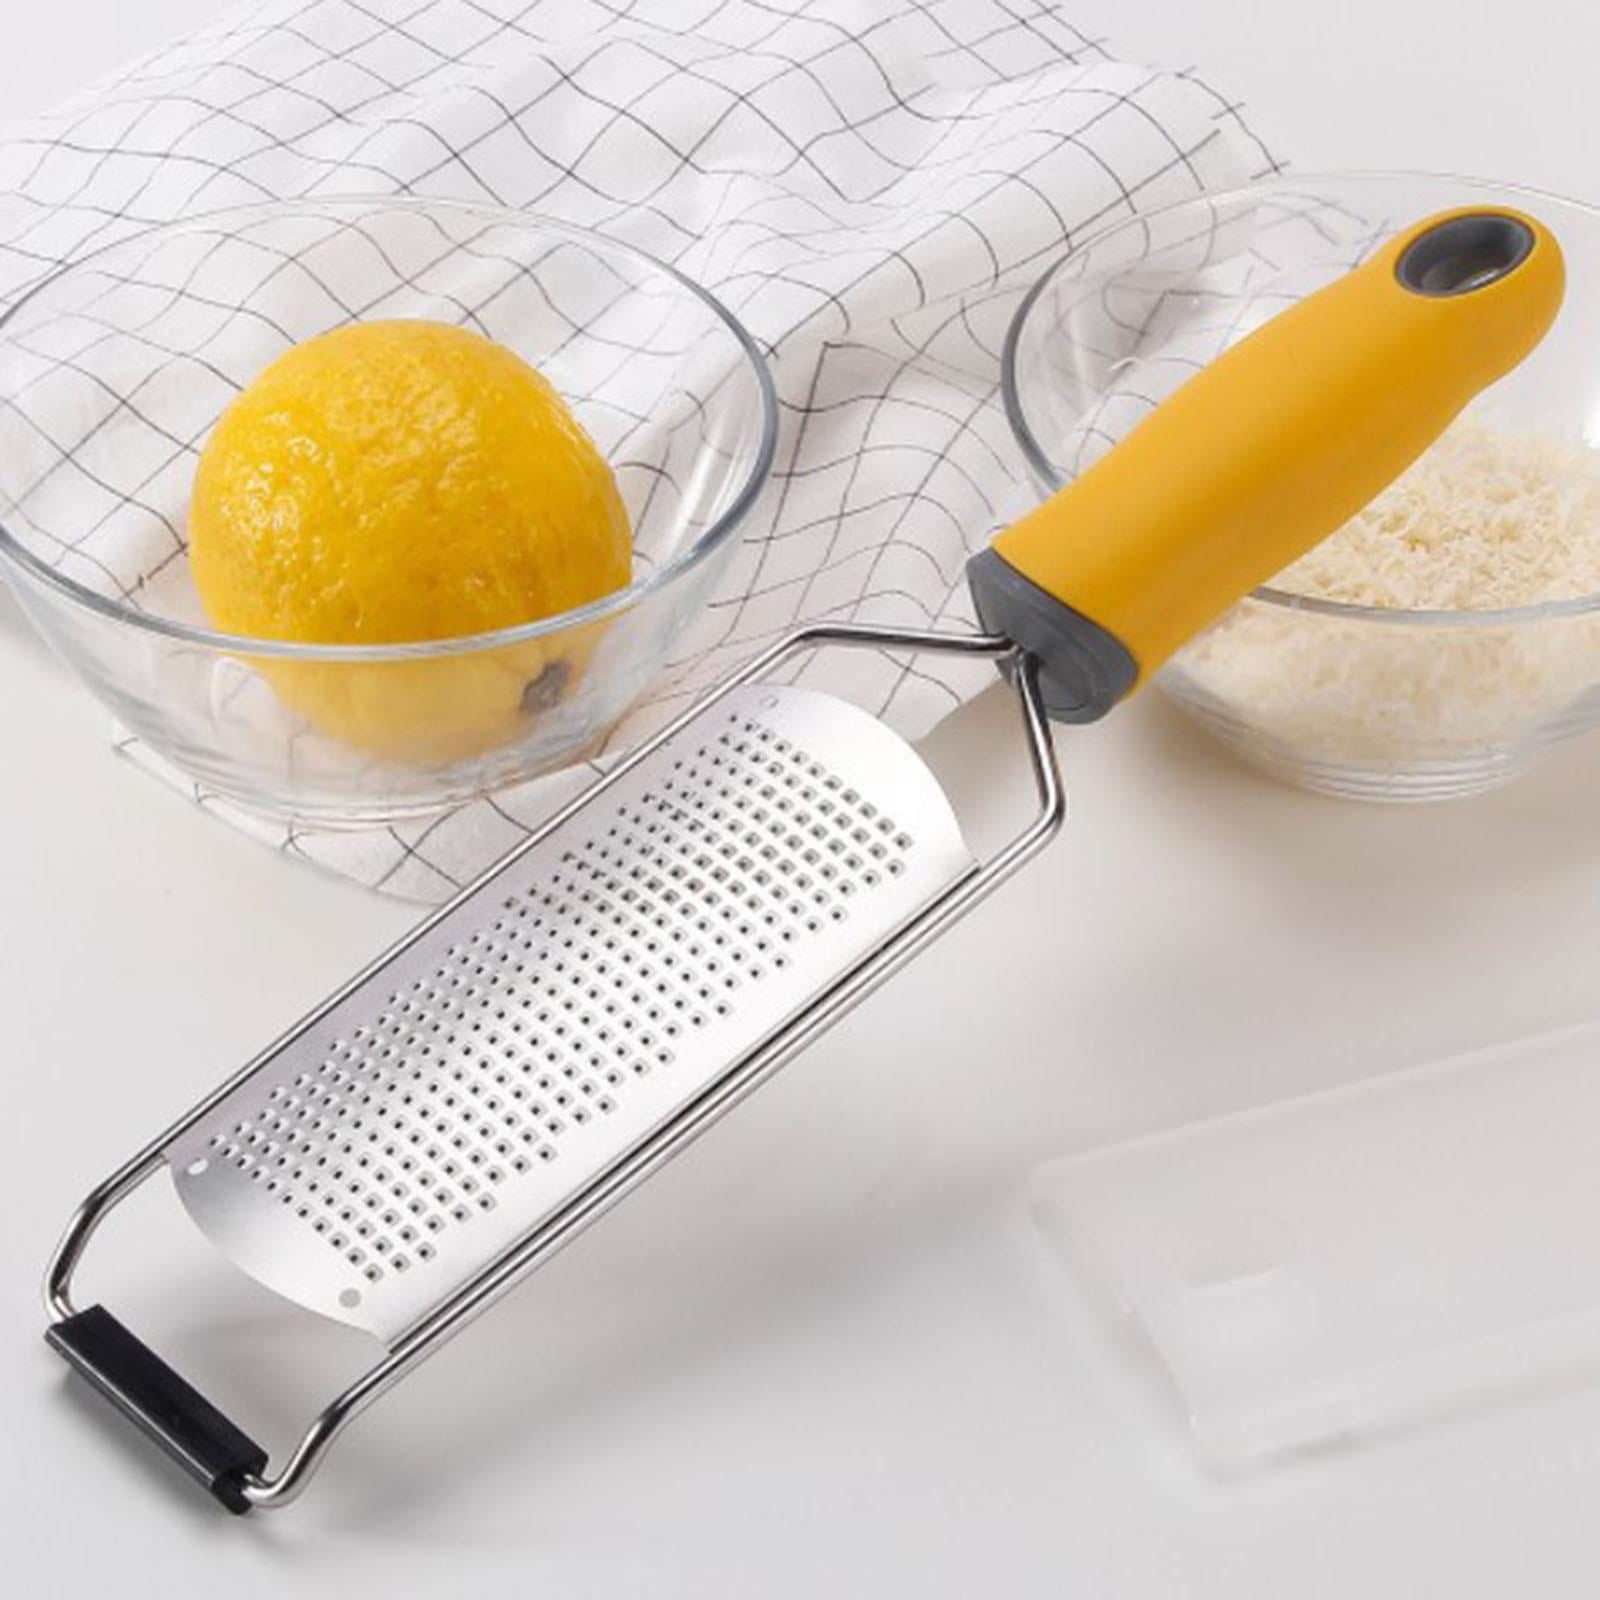 Handheld 304 Stainless Steel Cheese Grater Multi Purpose Sharp Vegetable  Fruit Tools Cheese Shavings Planer Kitchen